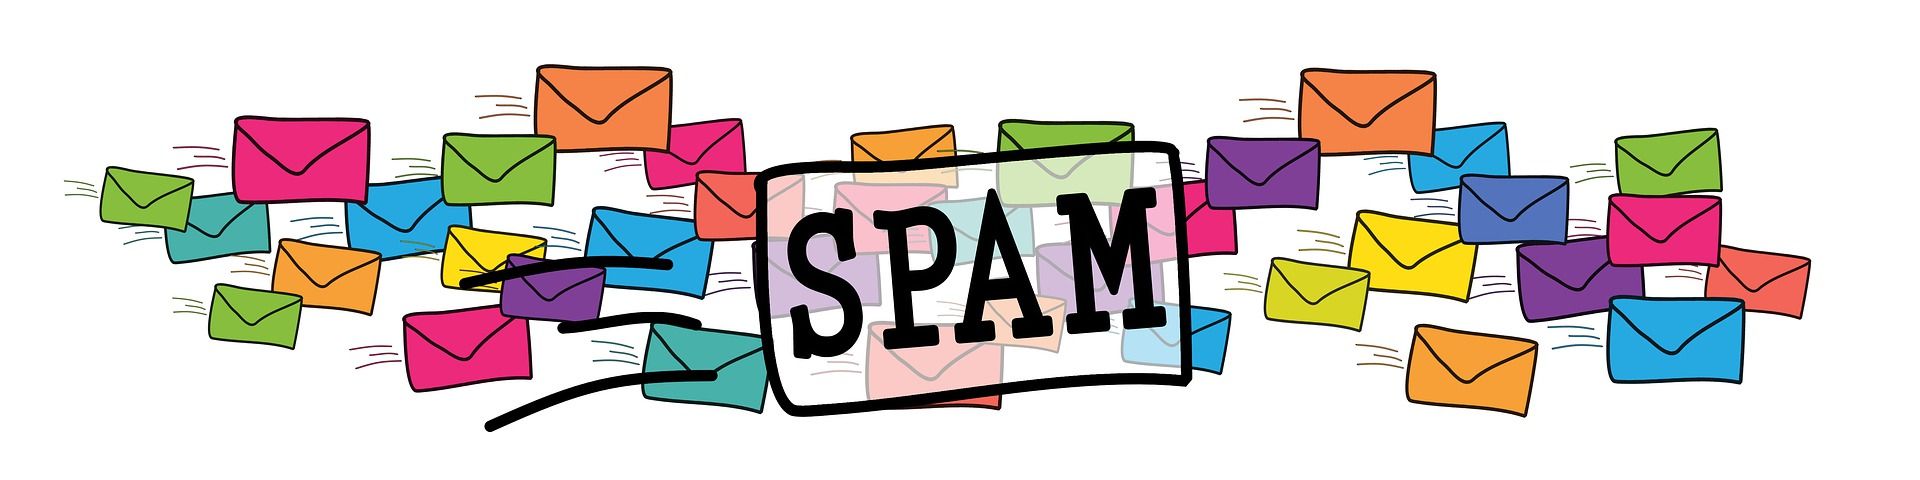 evitar spam